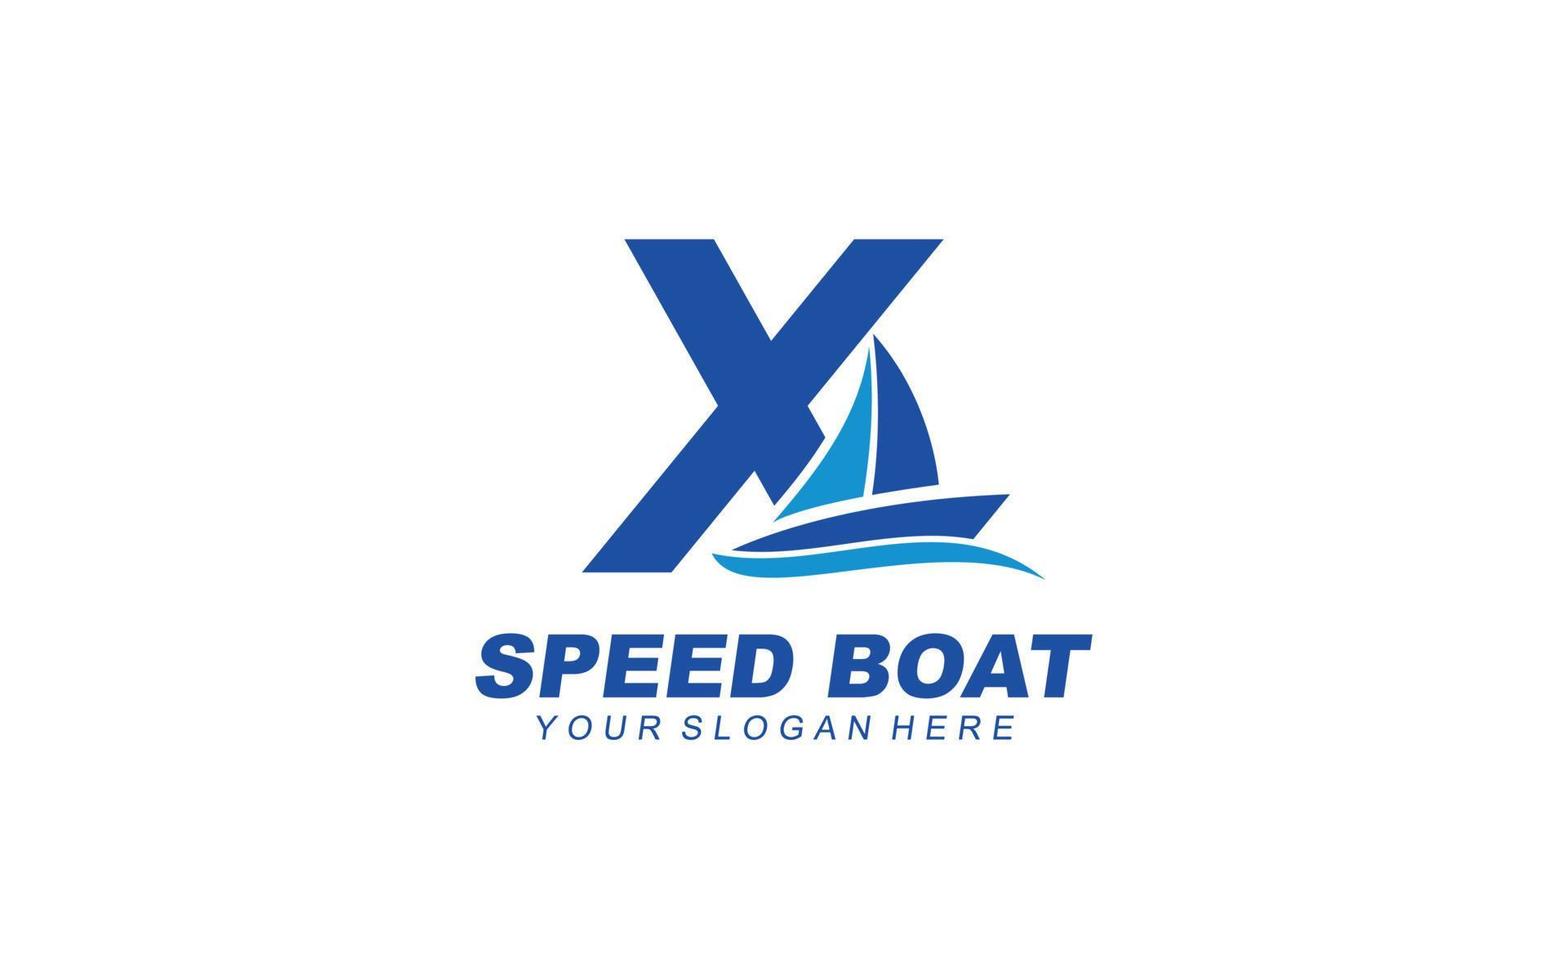 X Boat logo design inspiration. Vector letter template design for brand.